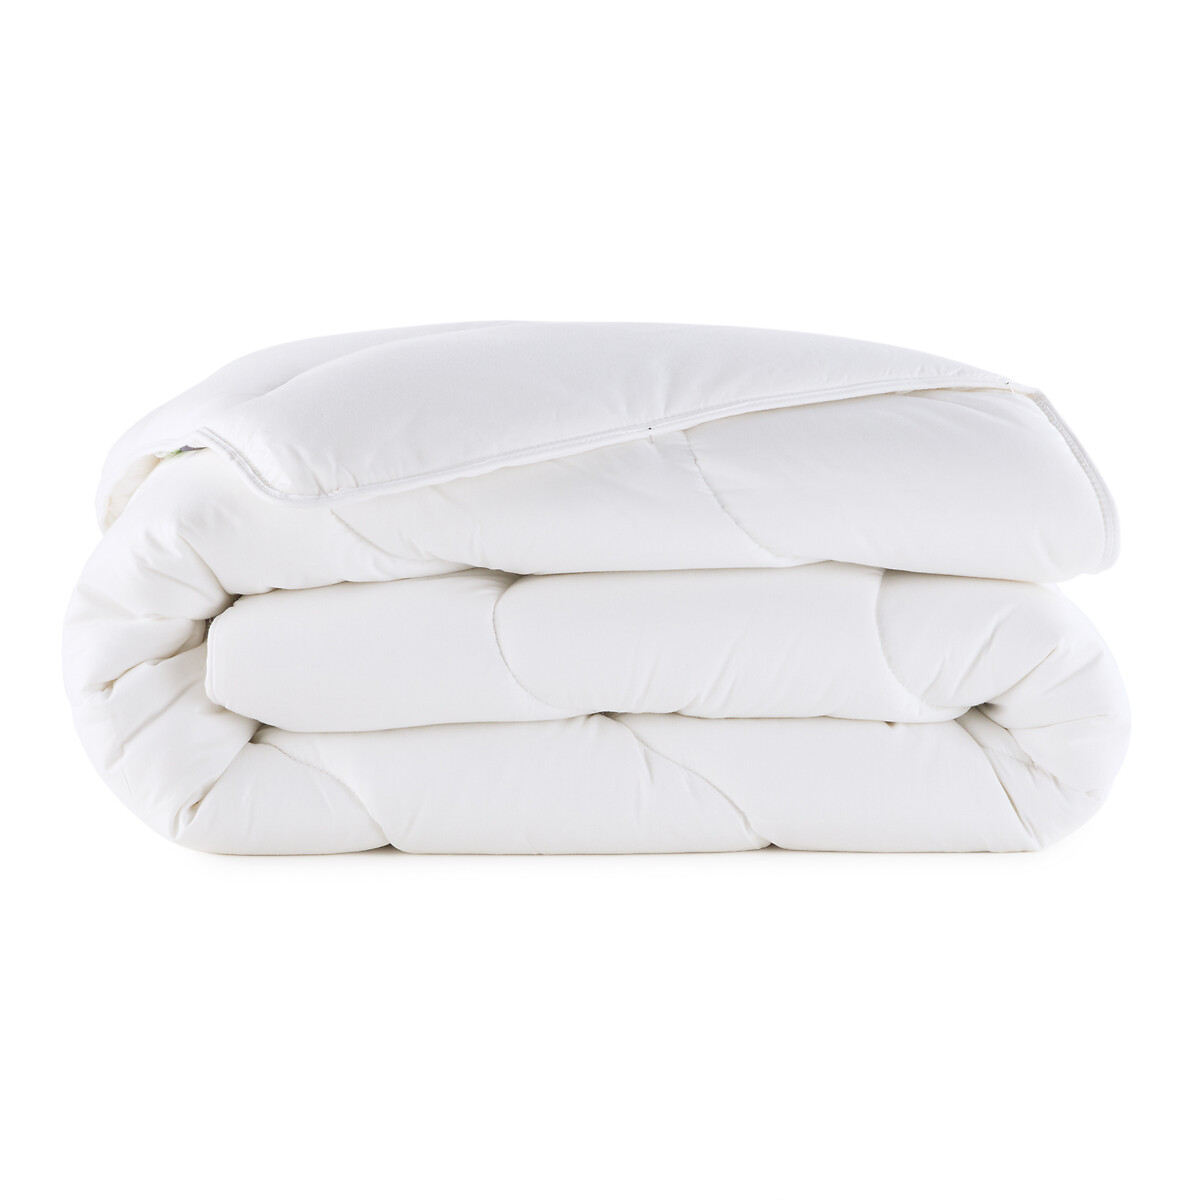 Одеяло Средней плотности из синтетики 300 гм 200 x 200 см белый LaRedoute, размер 200 x 200 см